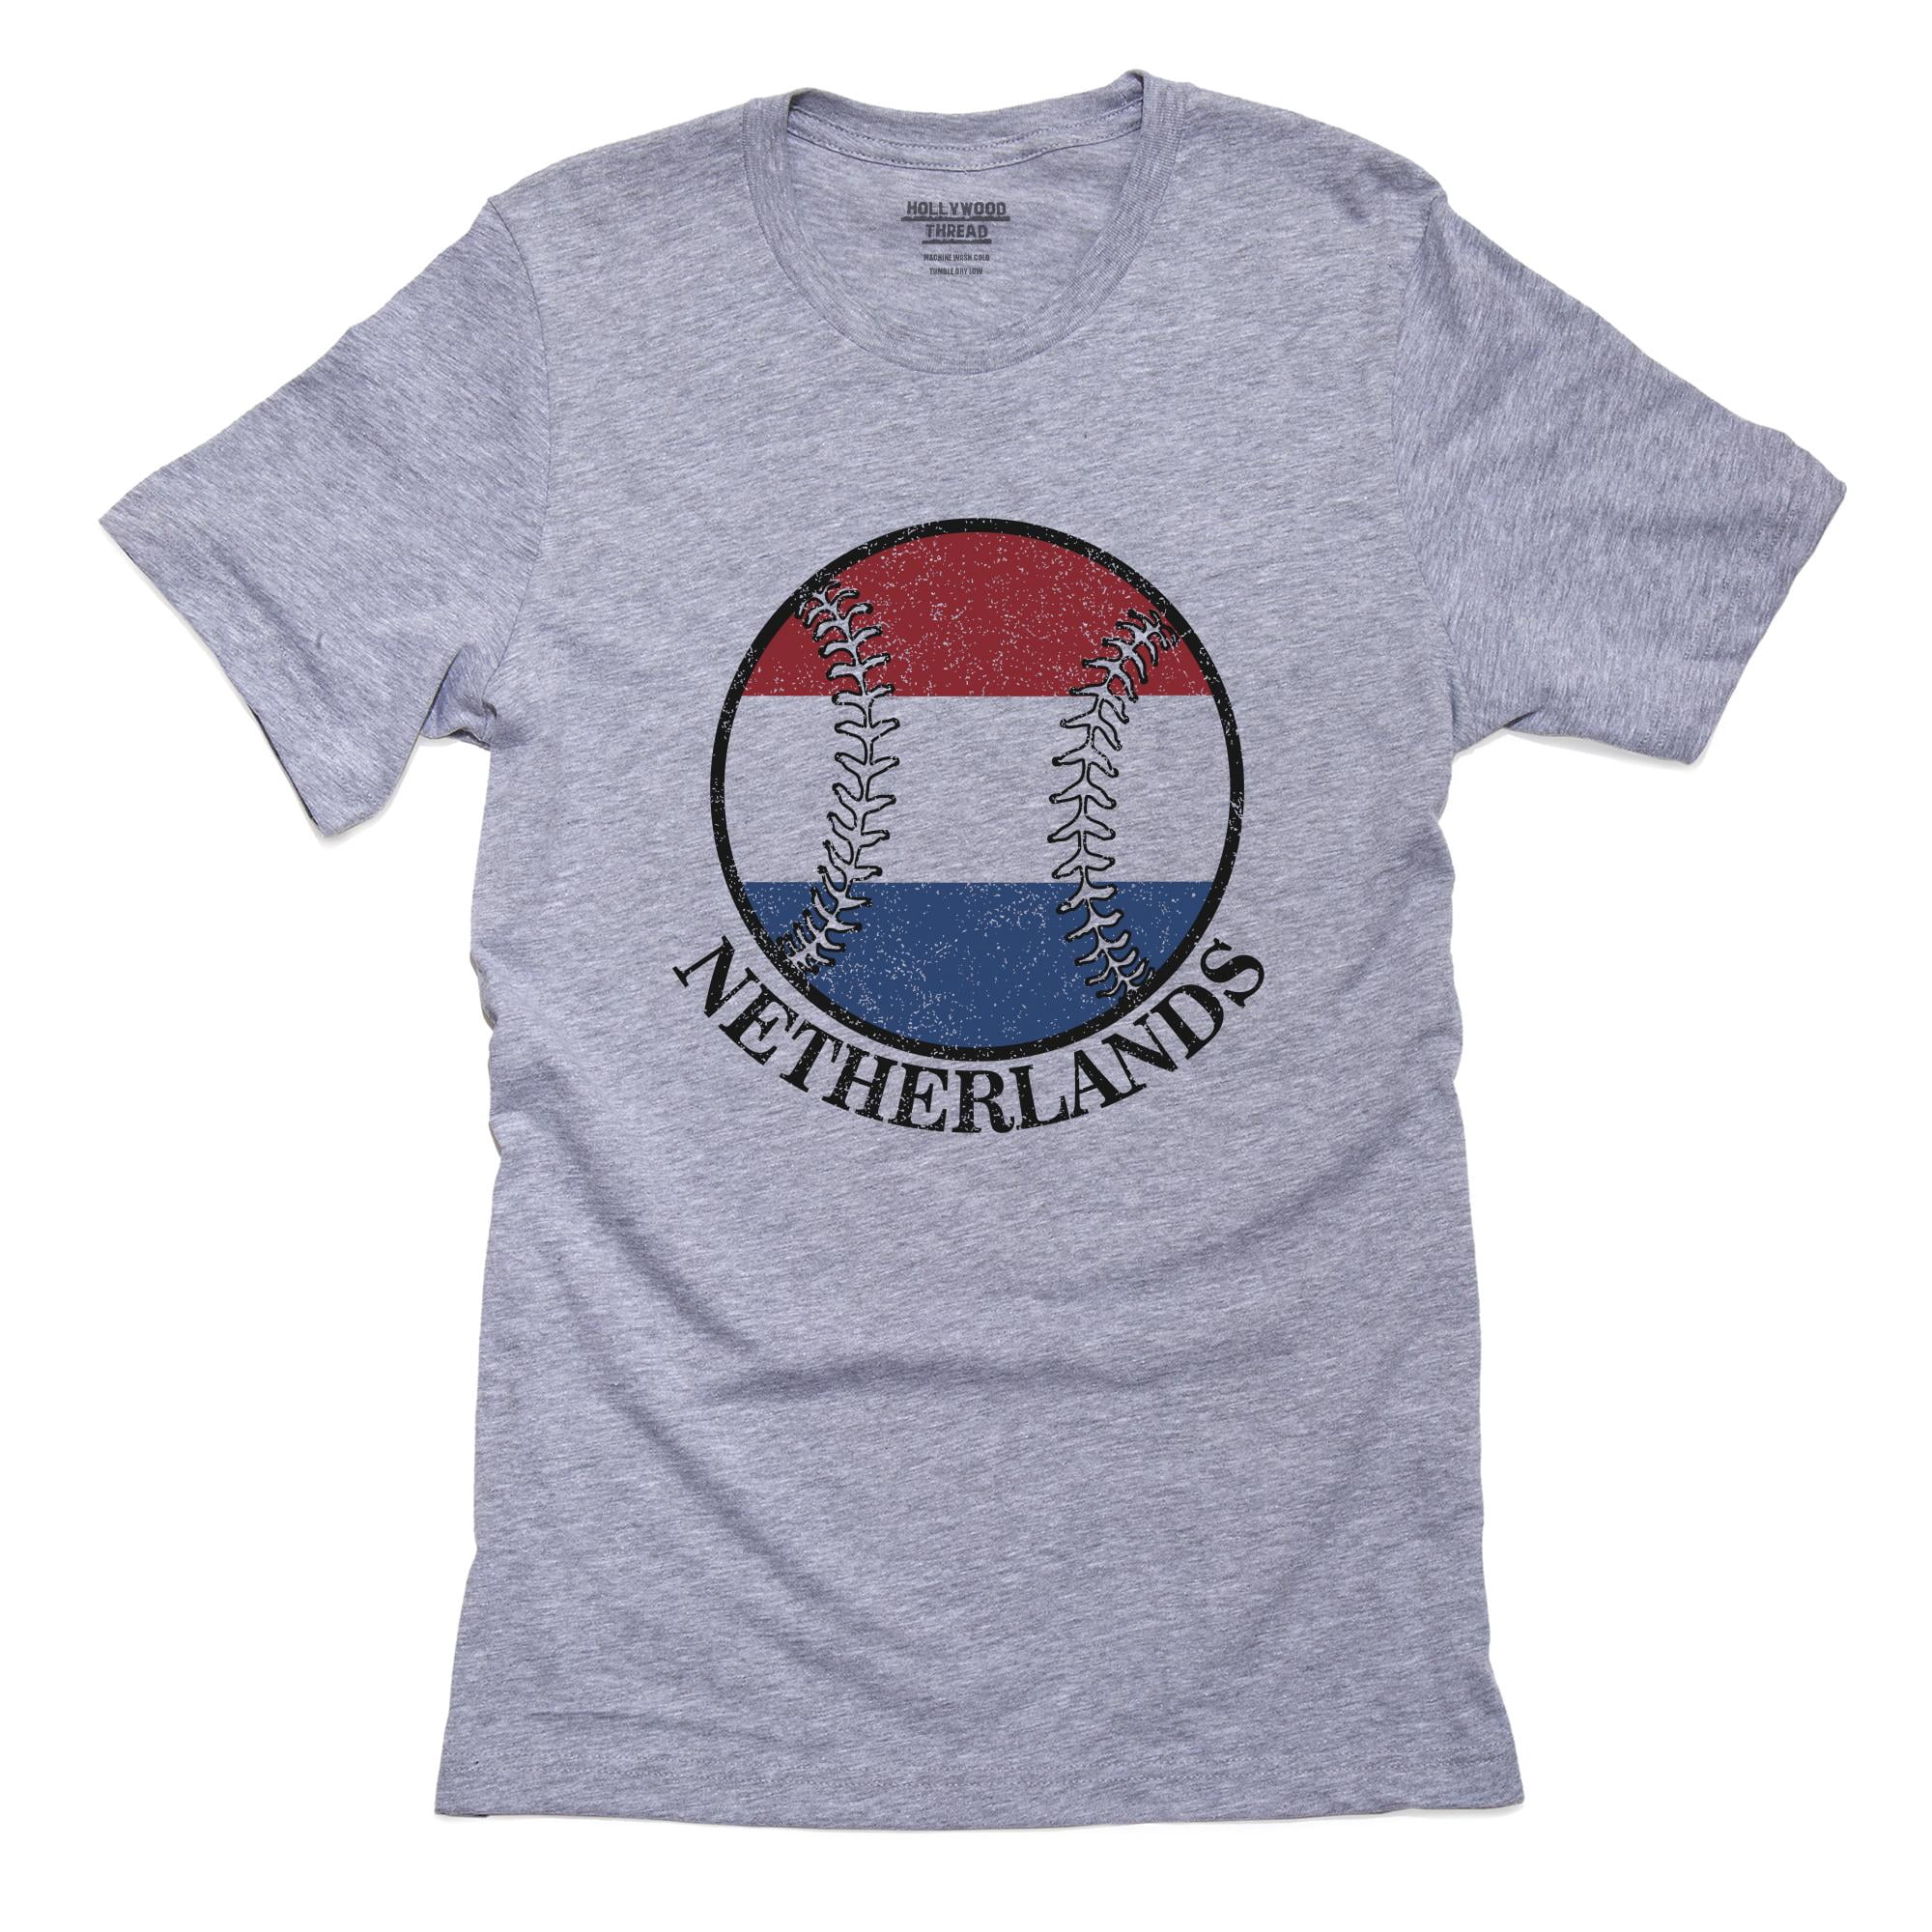  Baseball Number 99 Judge Home Run Record Dinger Tour 62 Cities  Homerun Mens Short Sleeve T-Shirt Graphic Tee : Sports & Outdoors